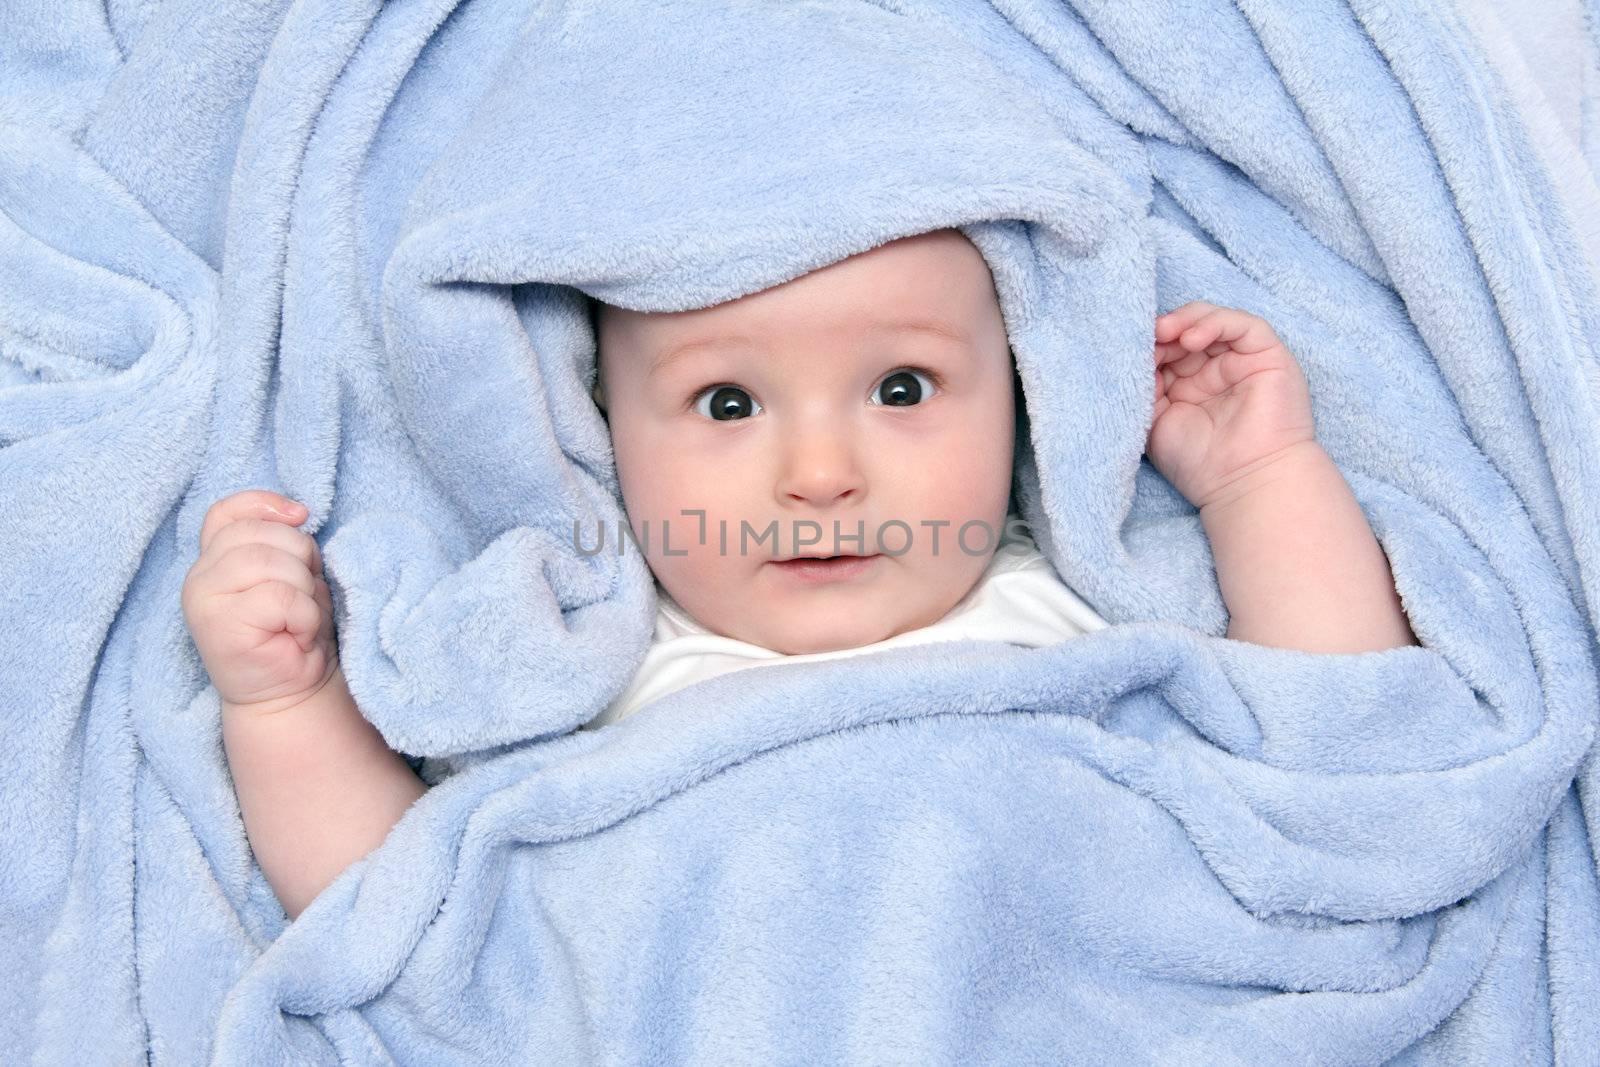 beautiful baby after bath under a blanket by NikolayK